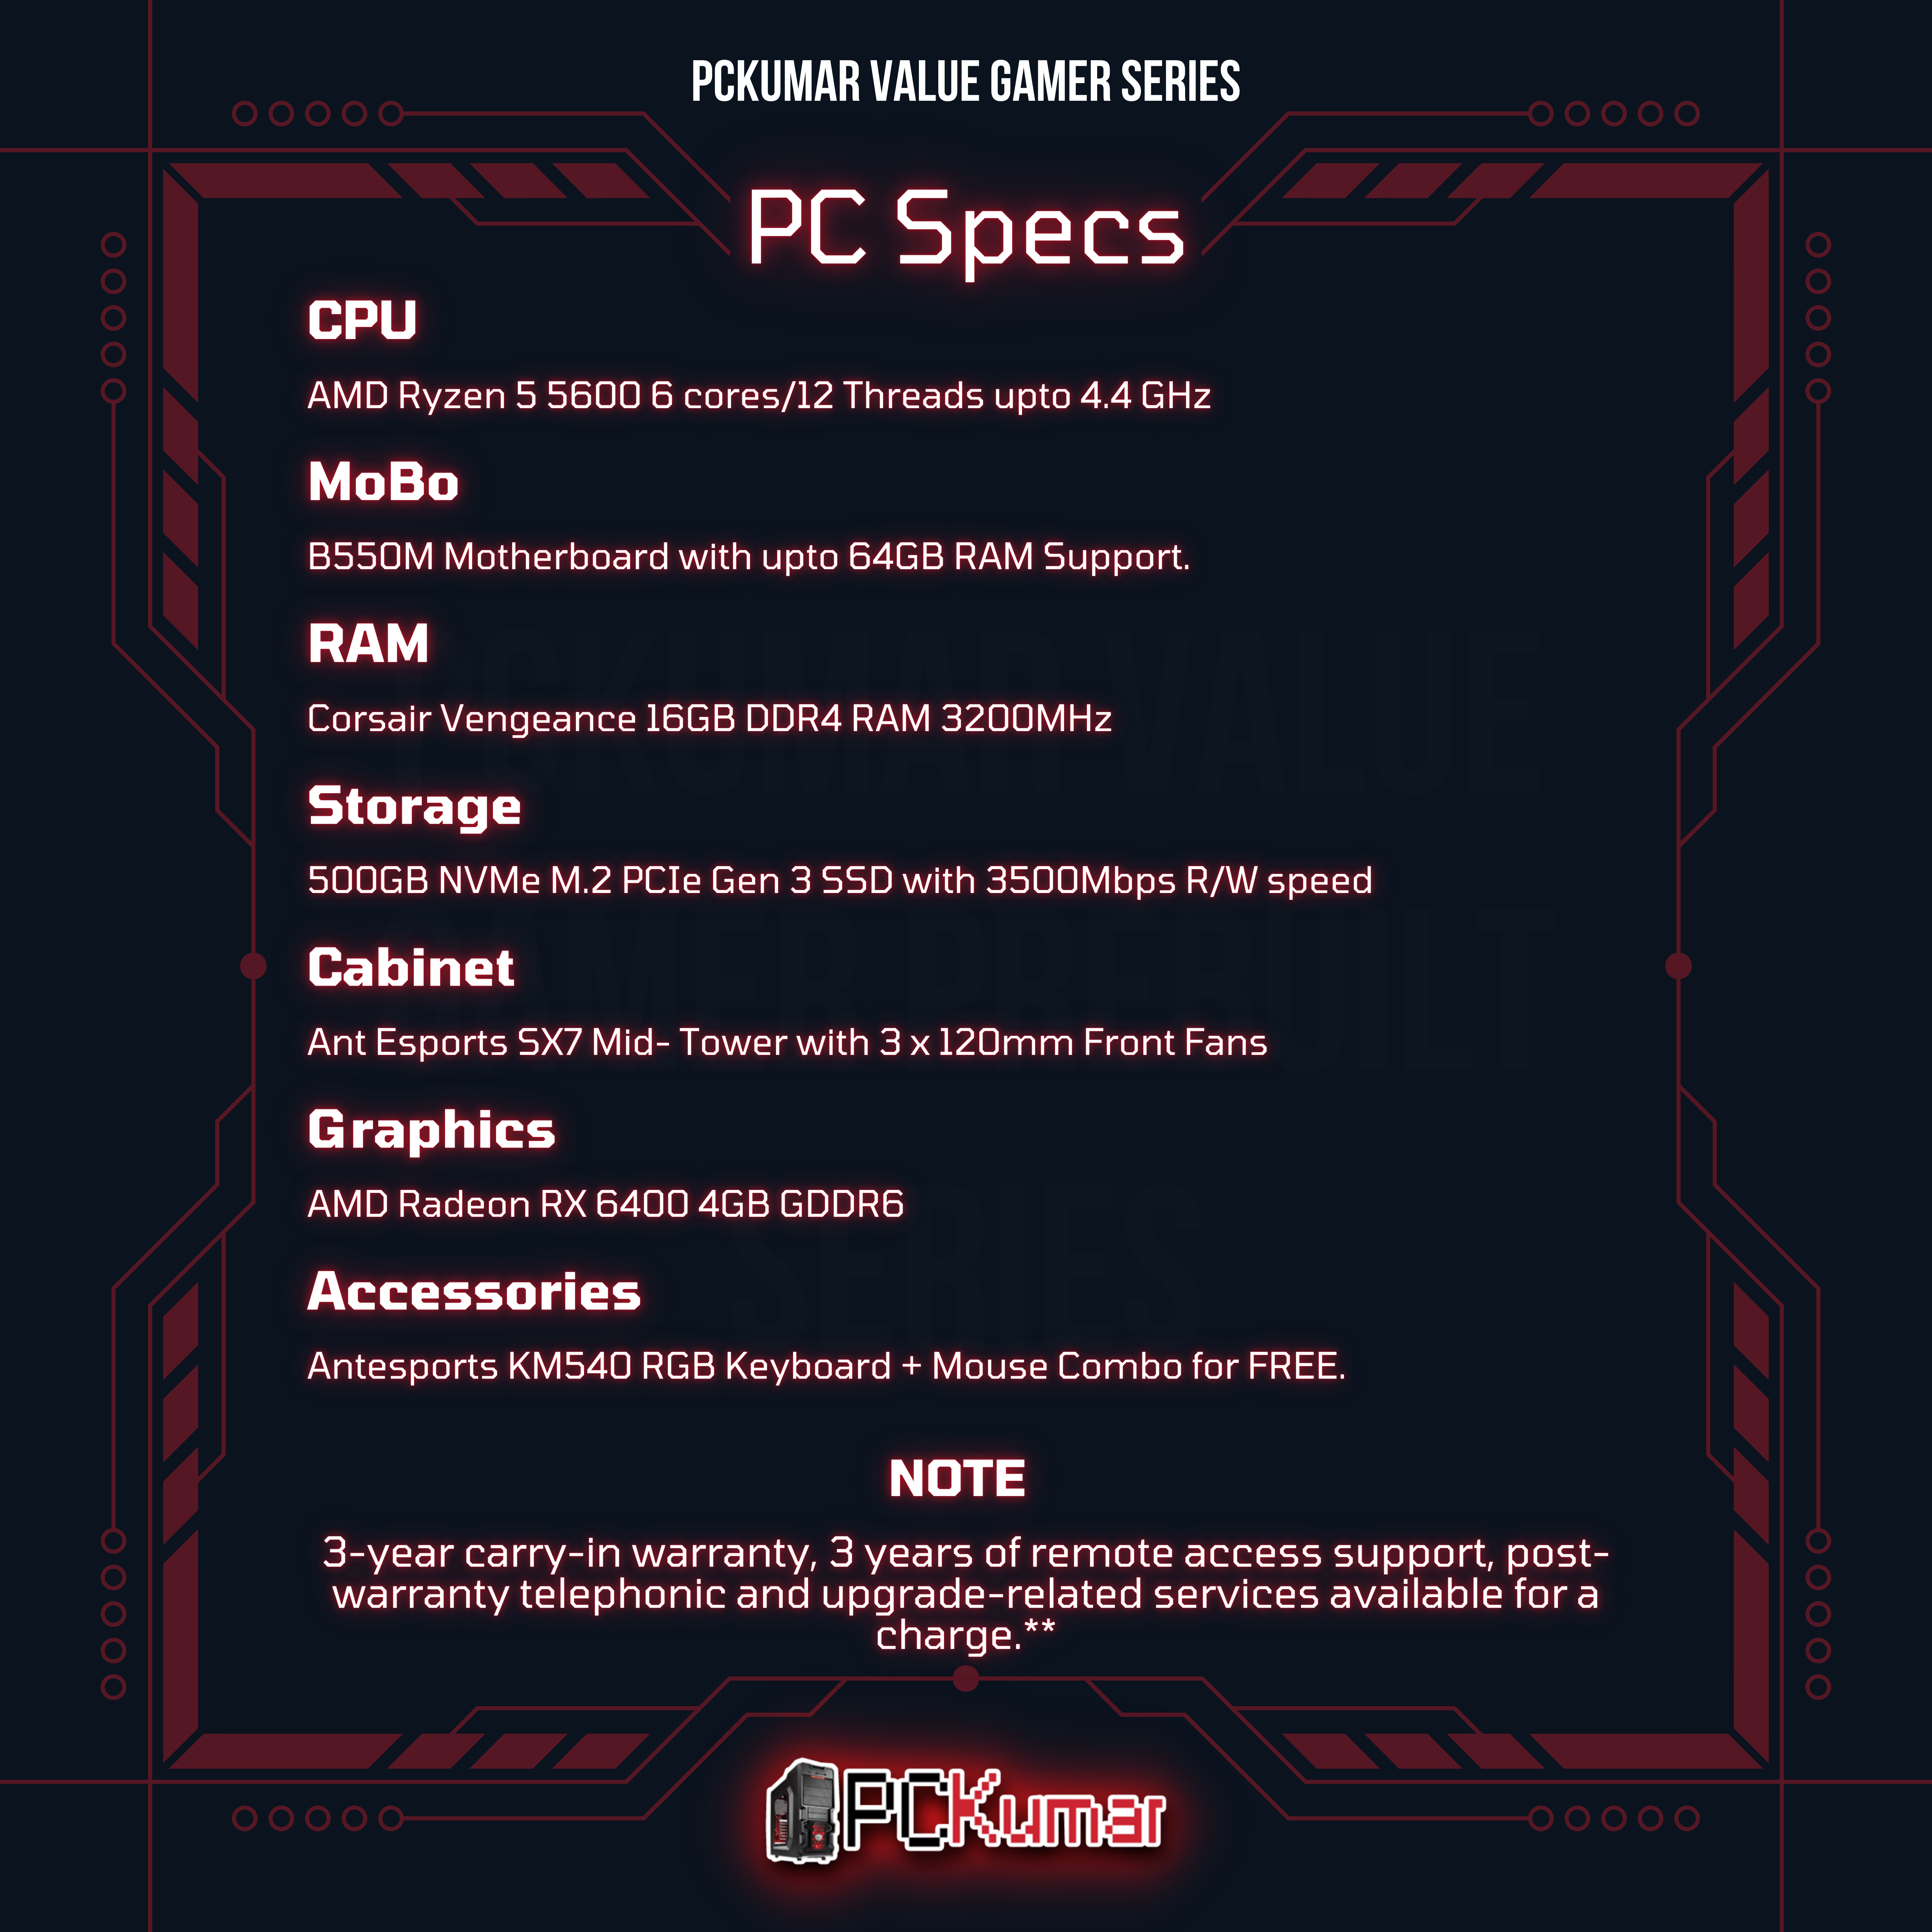 Value Gamer with AMD Ryzen 5 5600 + RX 6400